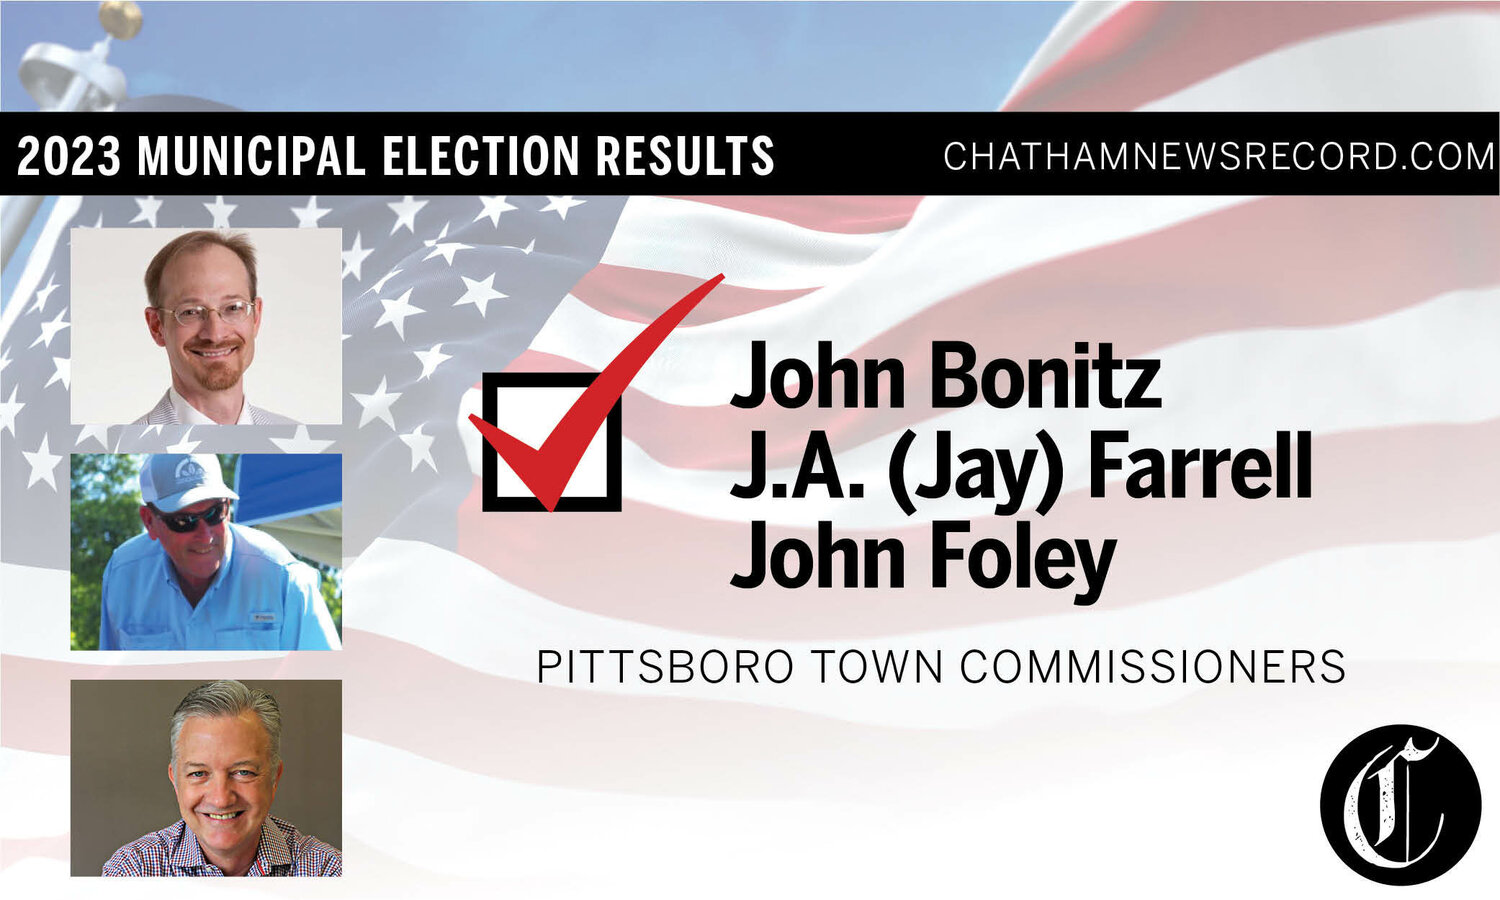 John Bonitz, Jay Farrell and John Foley won seats for Pittsboro Town Commissioners on Tuesday, Nov. 7, 2023.